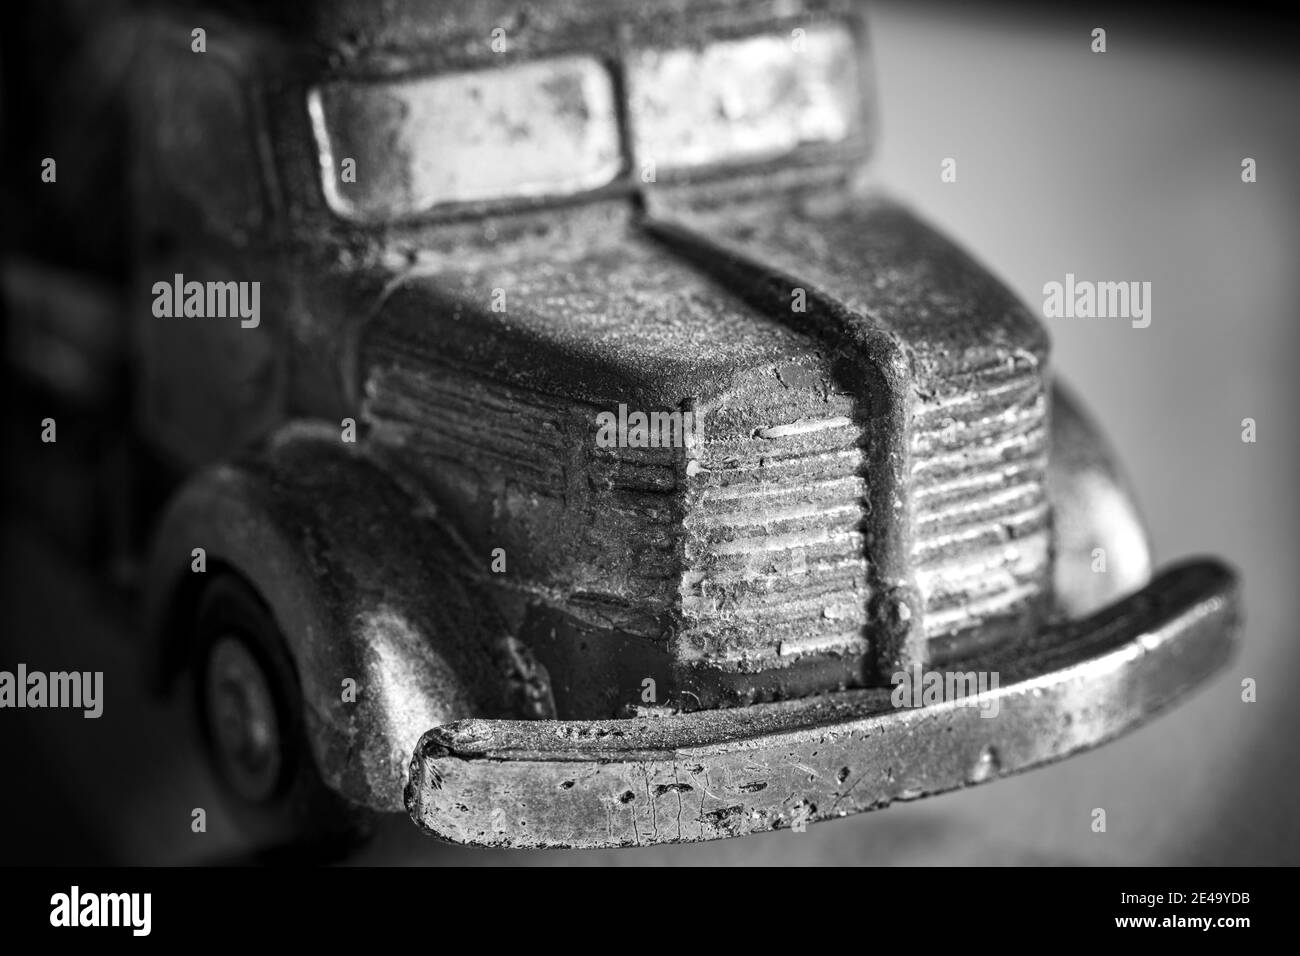 Truck model car Stock Photo